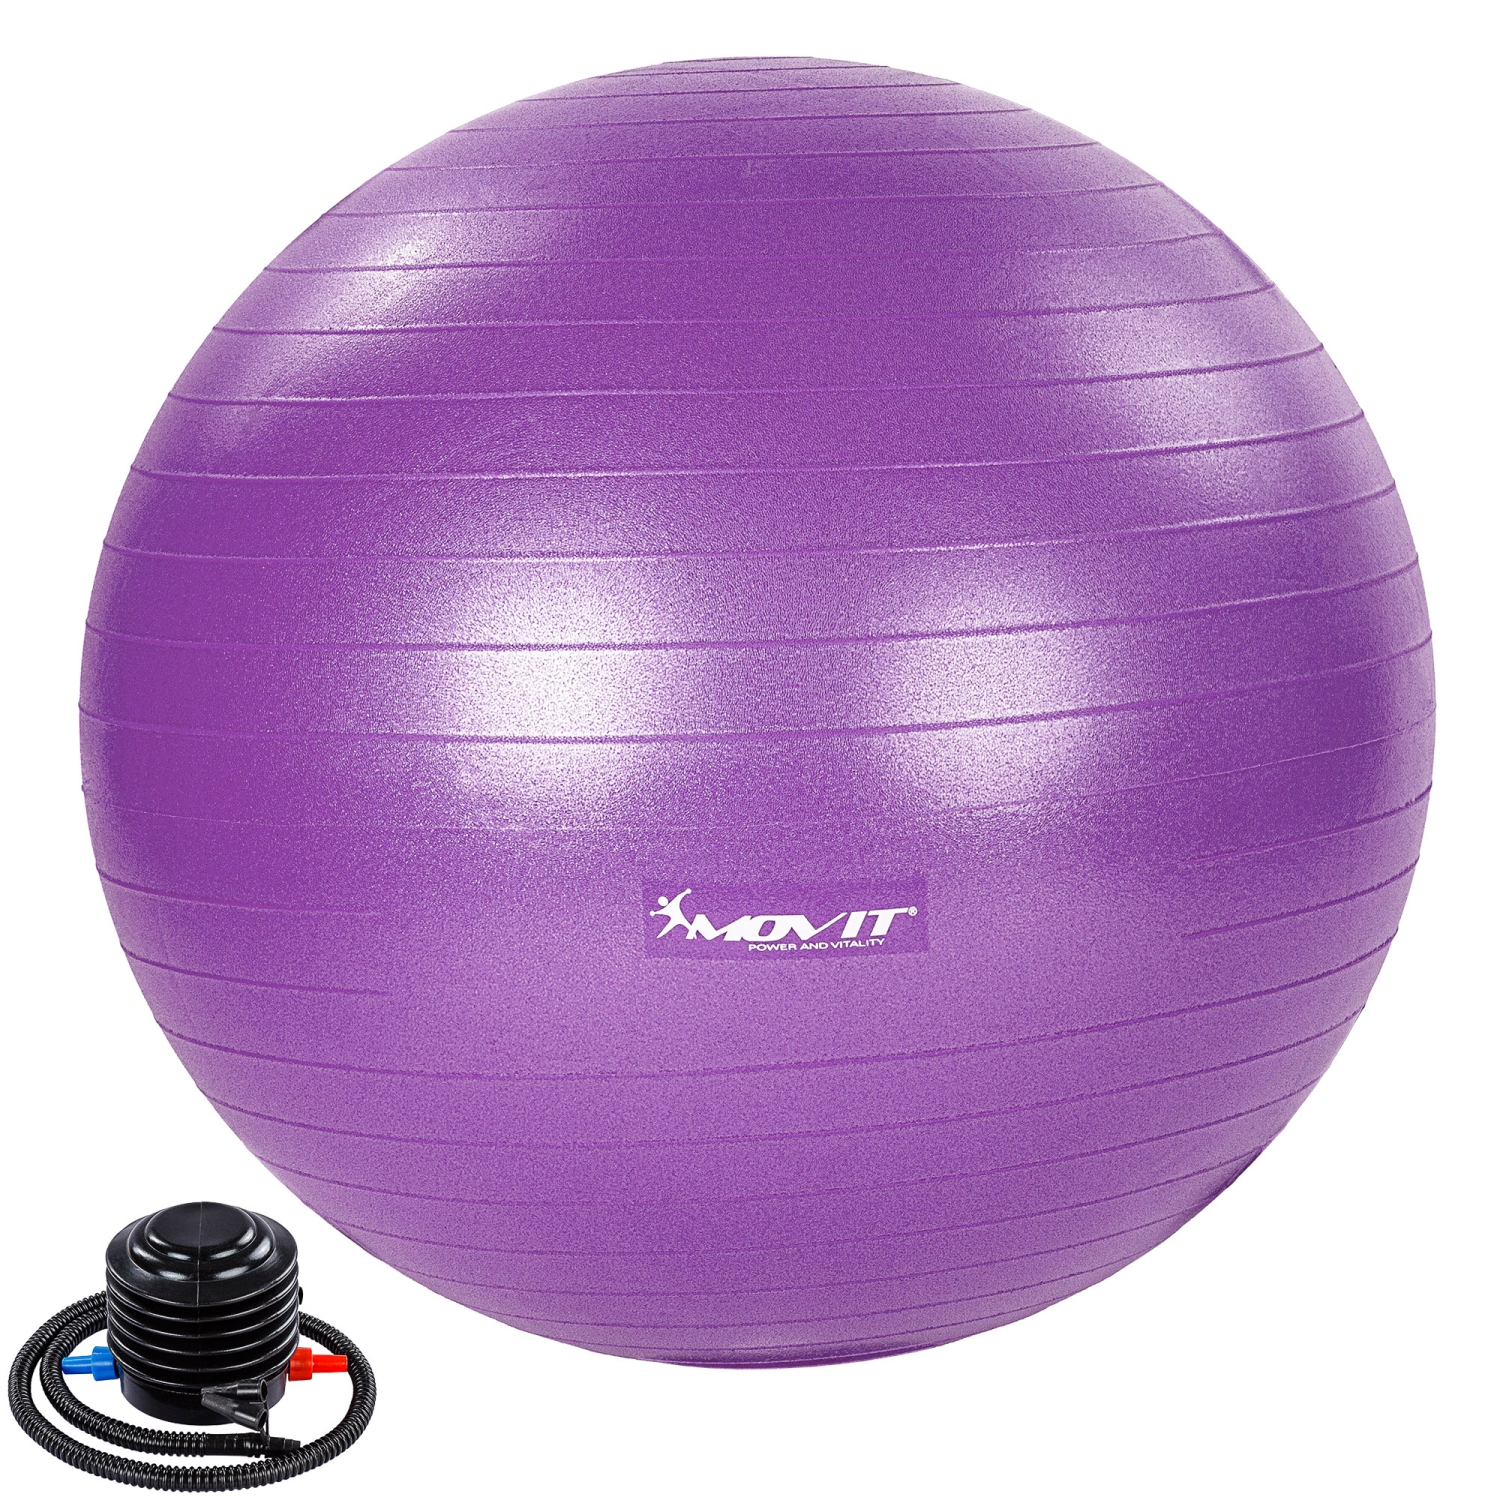 Yoga bal – Pilates bal – Fitness bal – 55 cm – Inclusief pomp – Paars